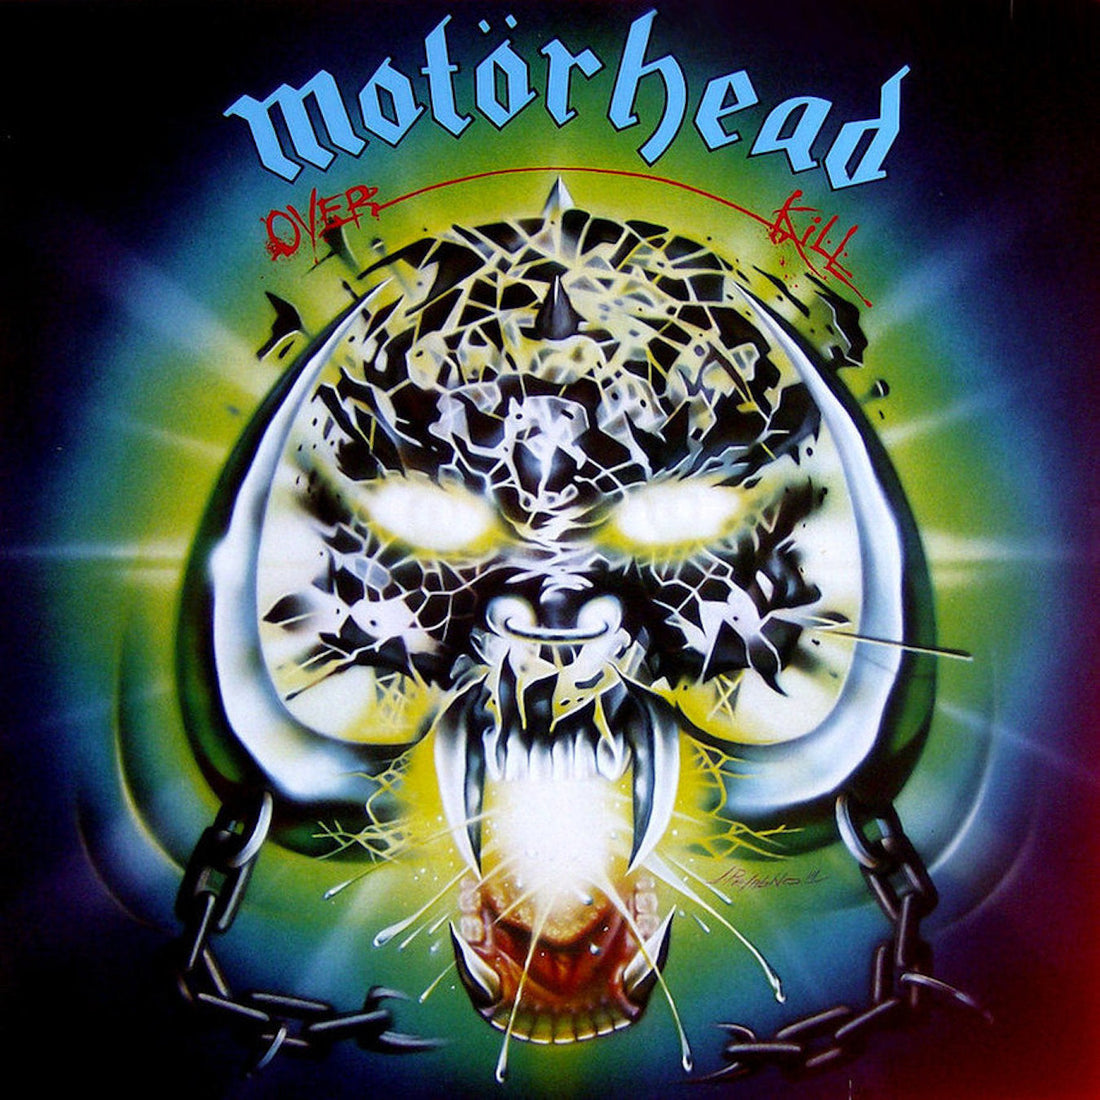 Motorhead 'Overkill' album 43 years old Official Merchandise Store